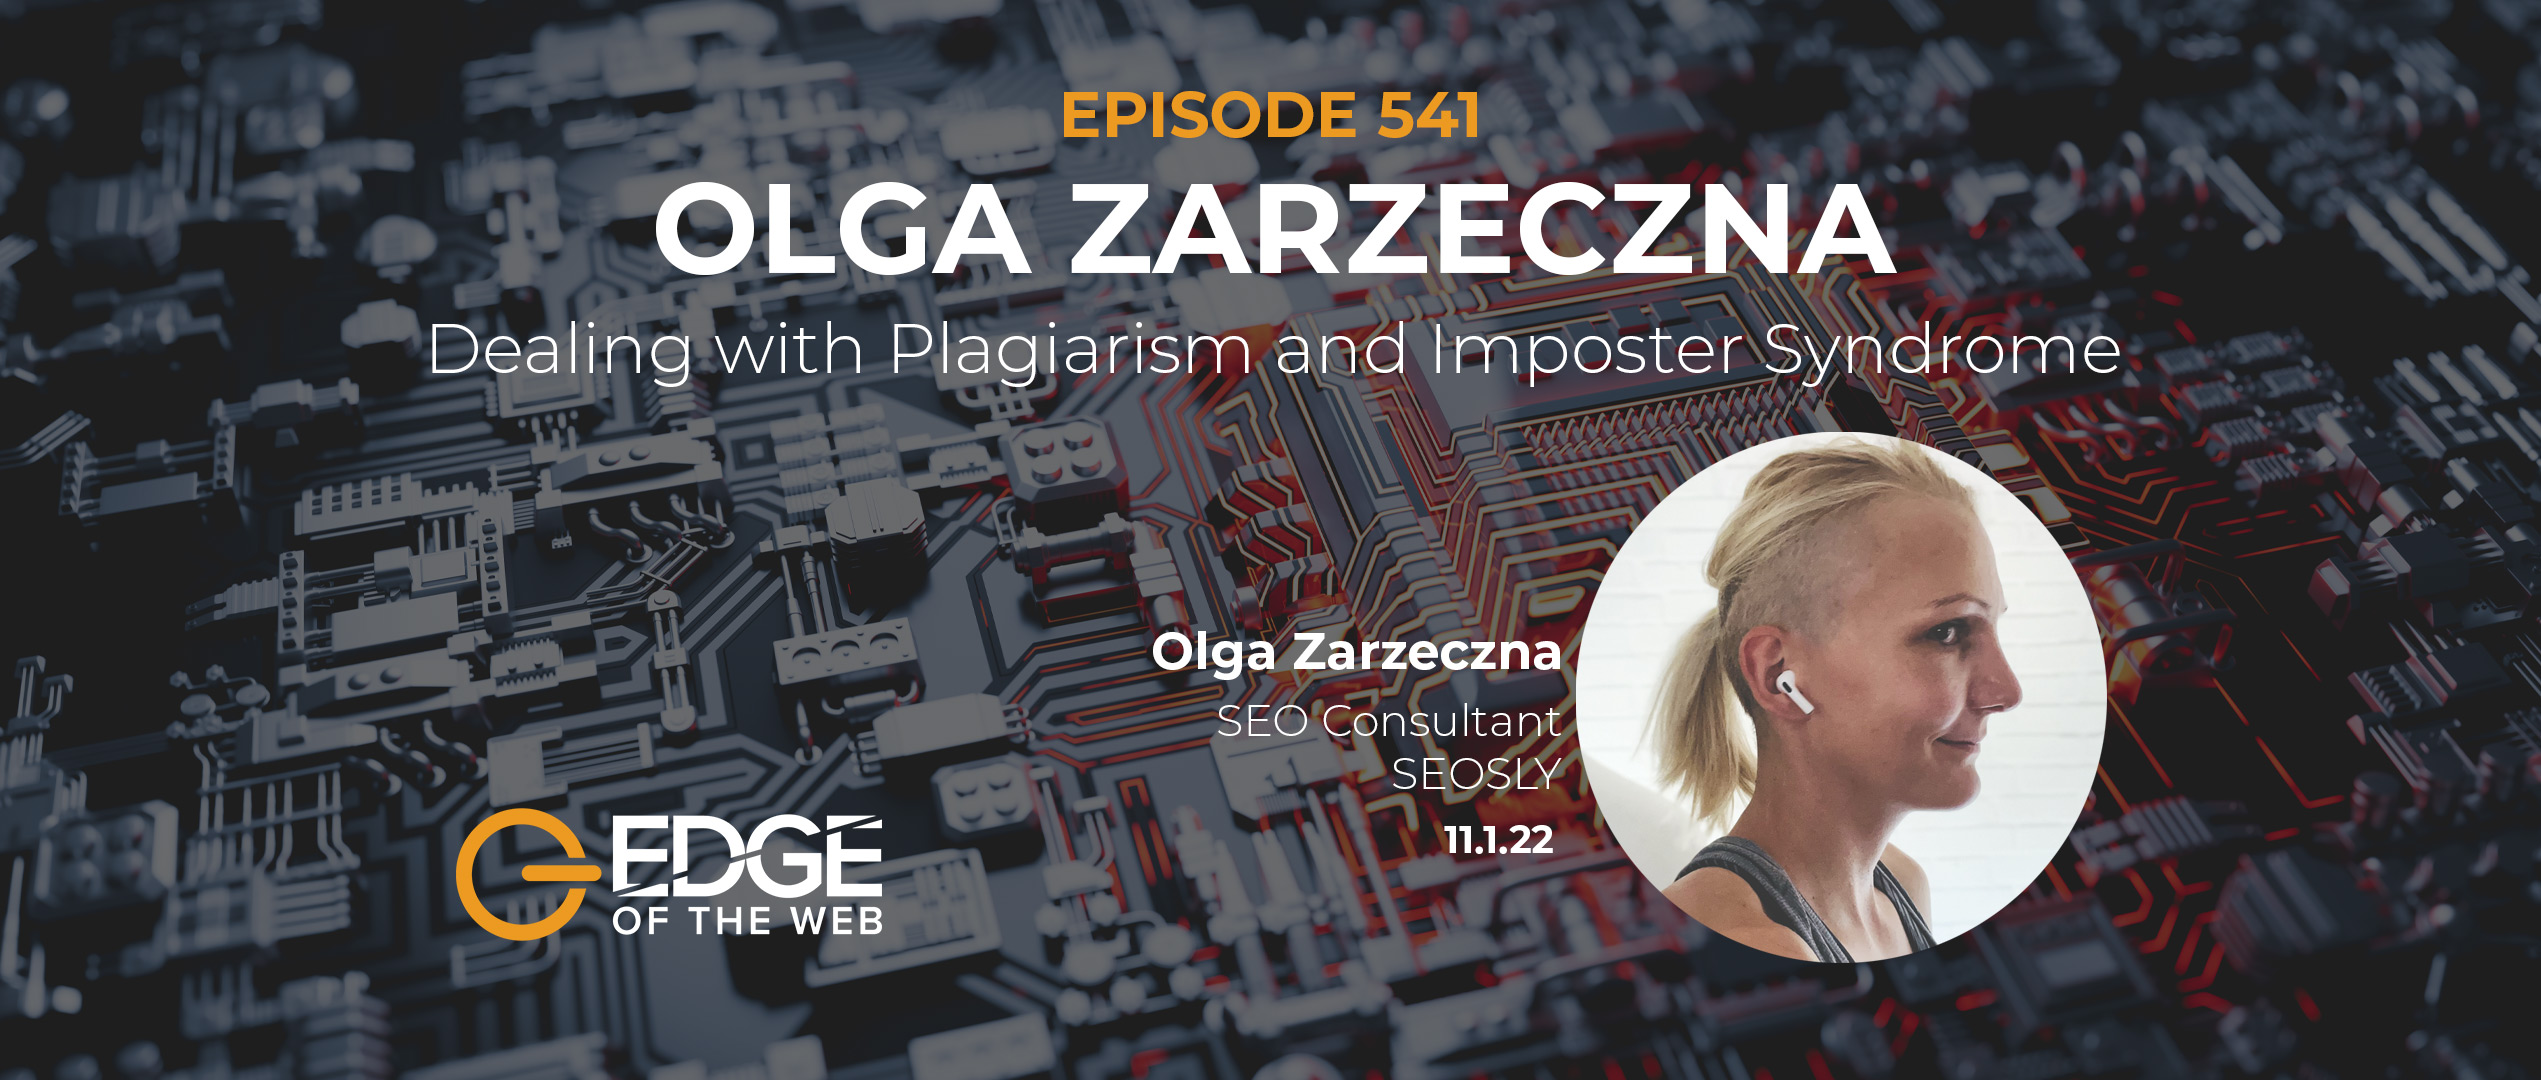 Olga Zarzeczna EDGE Episode 541 Featured Image